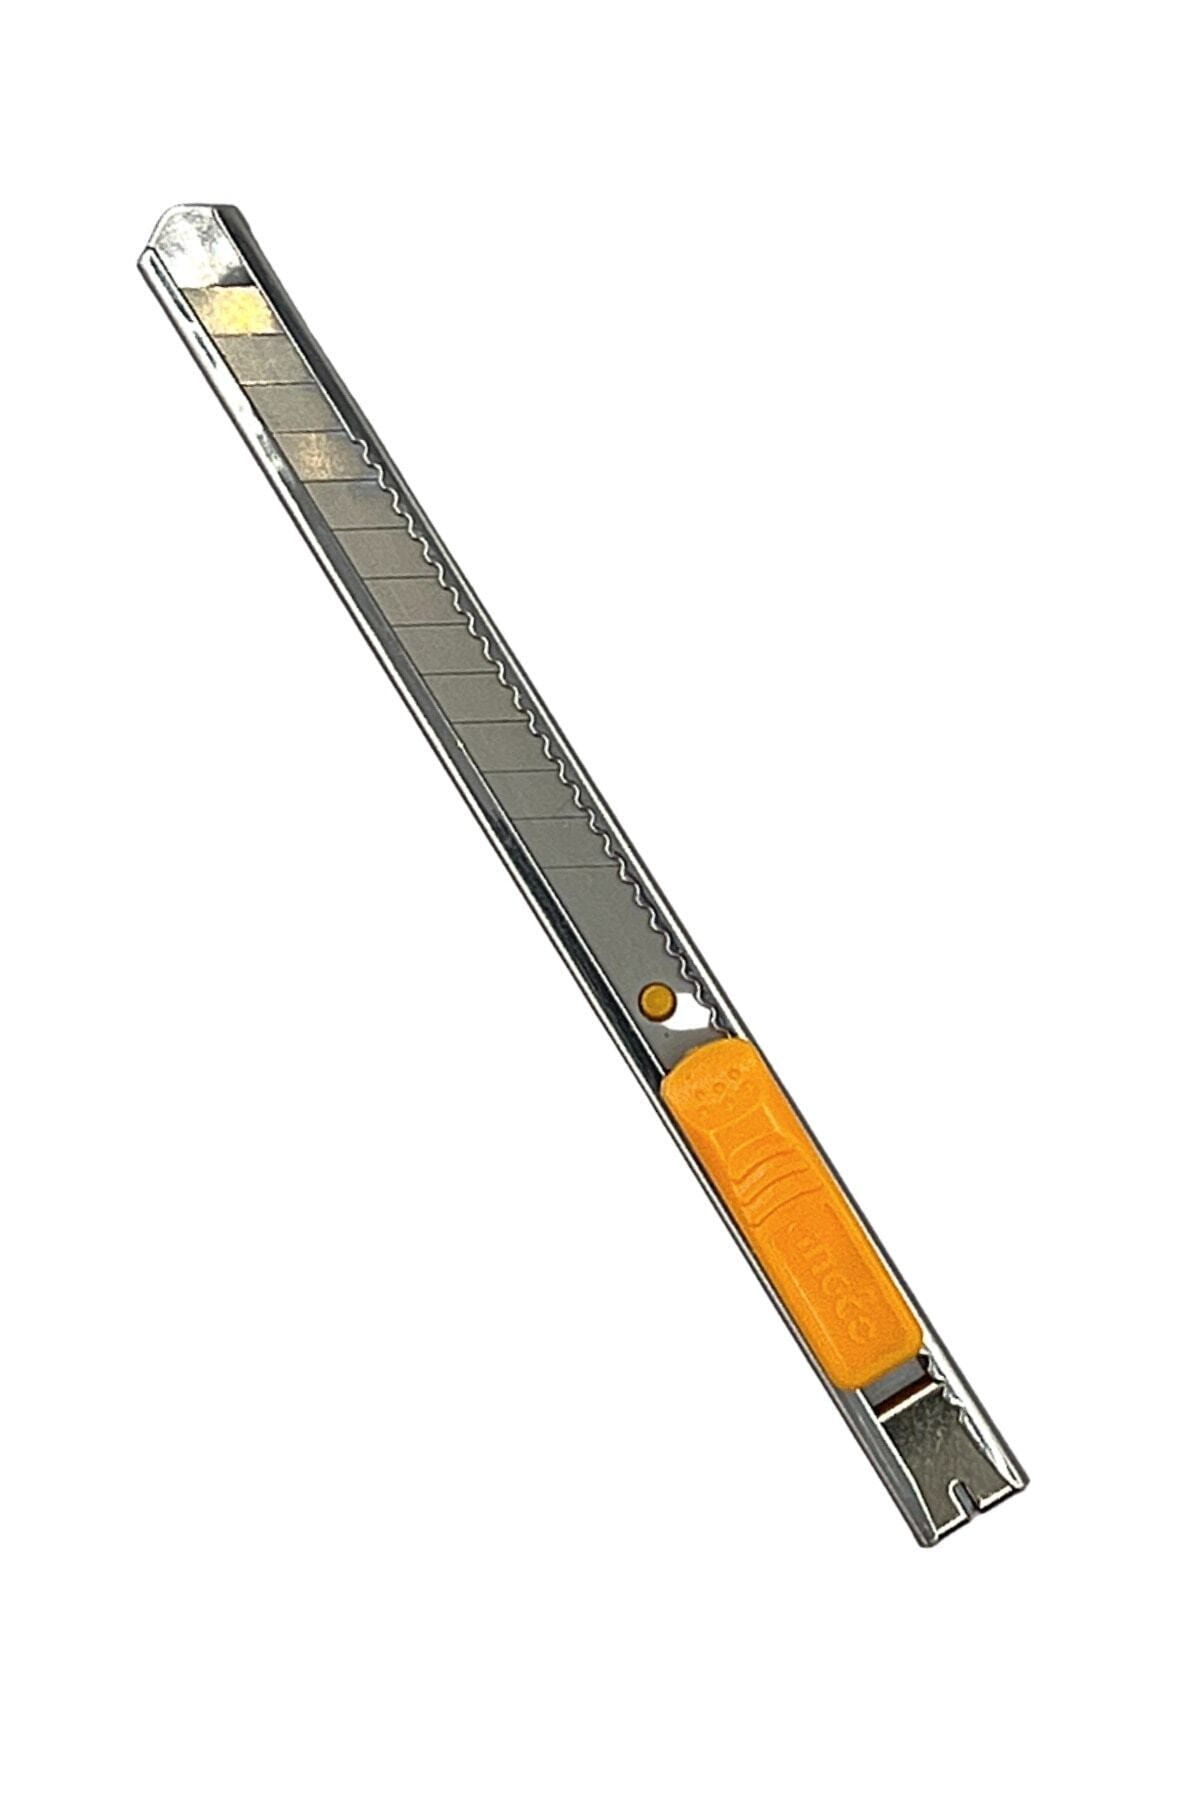 KL HOME Snap-off Bıçak Ince Cep Tip Metal Maket Bıçağı Falçata 9x80 Mm